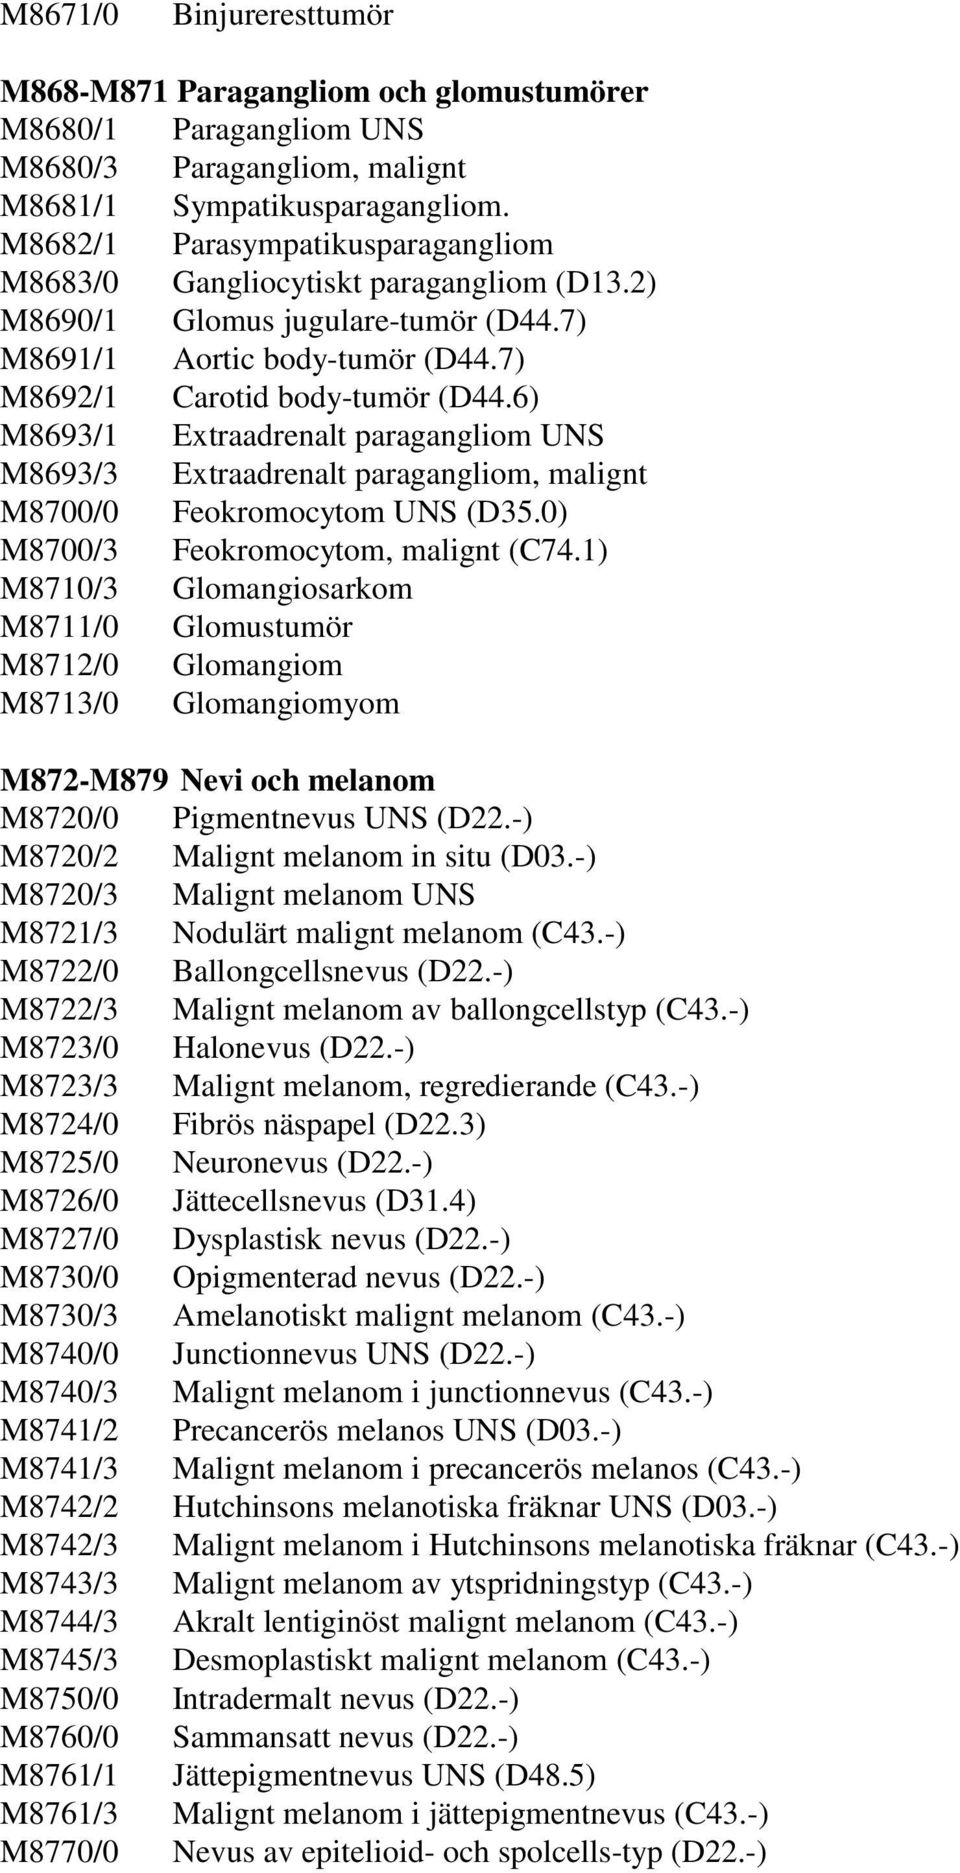 6) M8693/1 Extraadrenalt paragangliom UNS M8693/3 Extraadrenalt paragangliom, malignt M8700/0 Feokromocytom UNS (D35.0) M8700/3 Feokromocytom, malignt (C74.